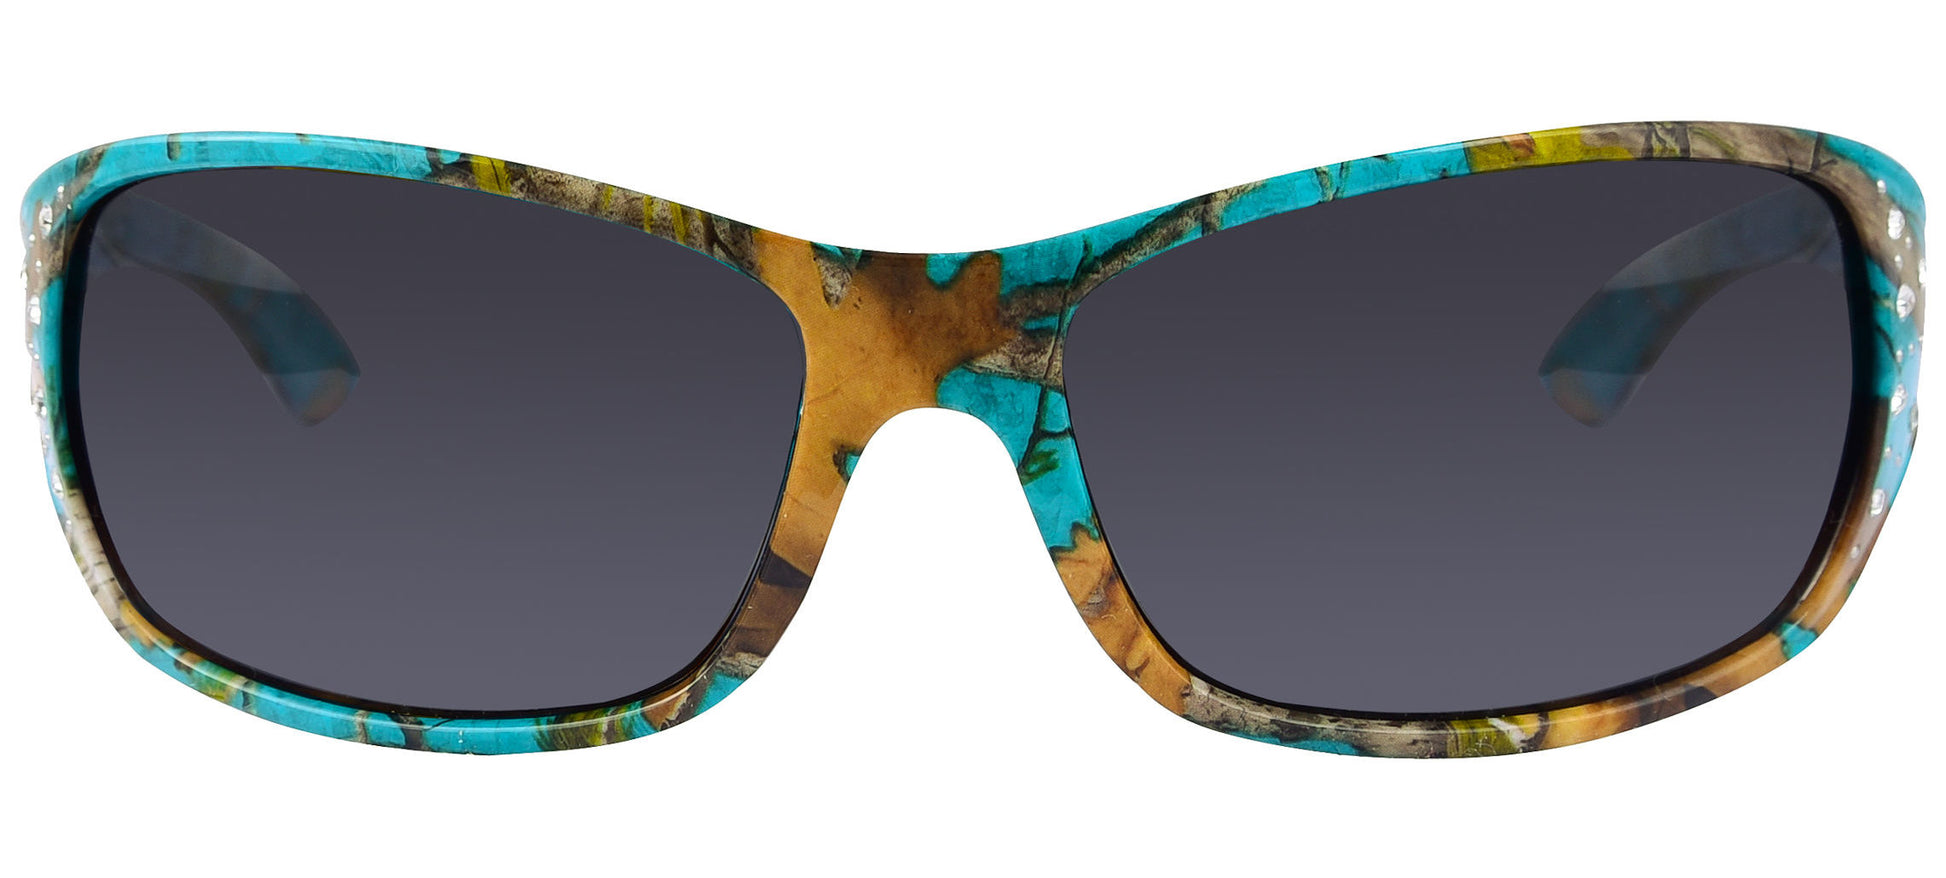 Third image: Polarized Teal Camo Sunglasses for Women - Elettra - Teal Camo Frame - Smoke Lens…